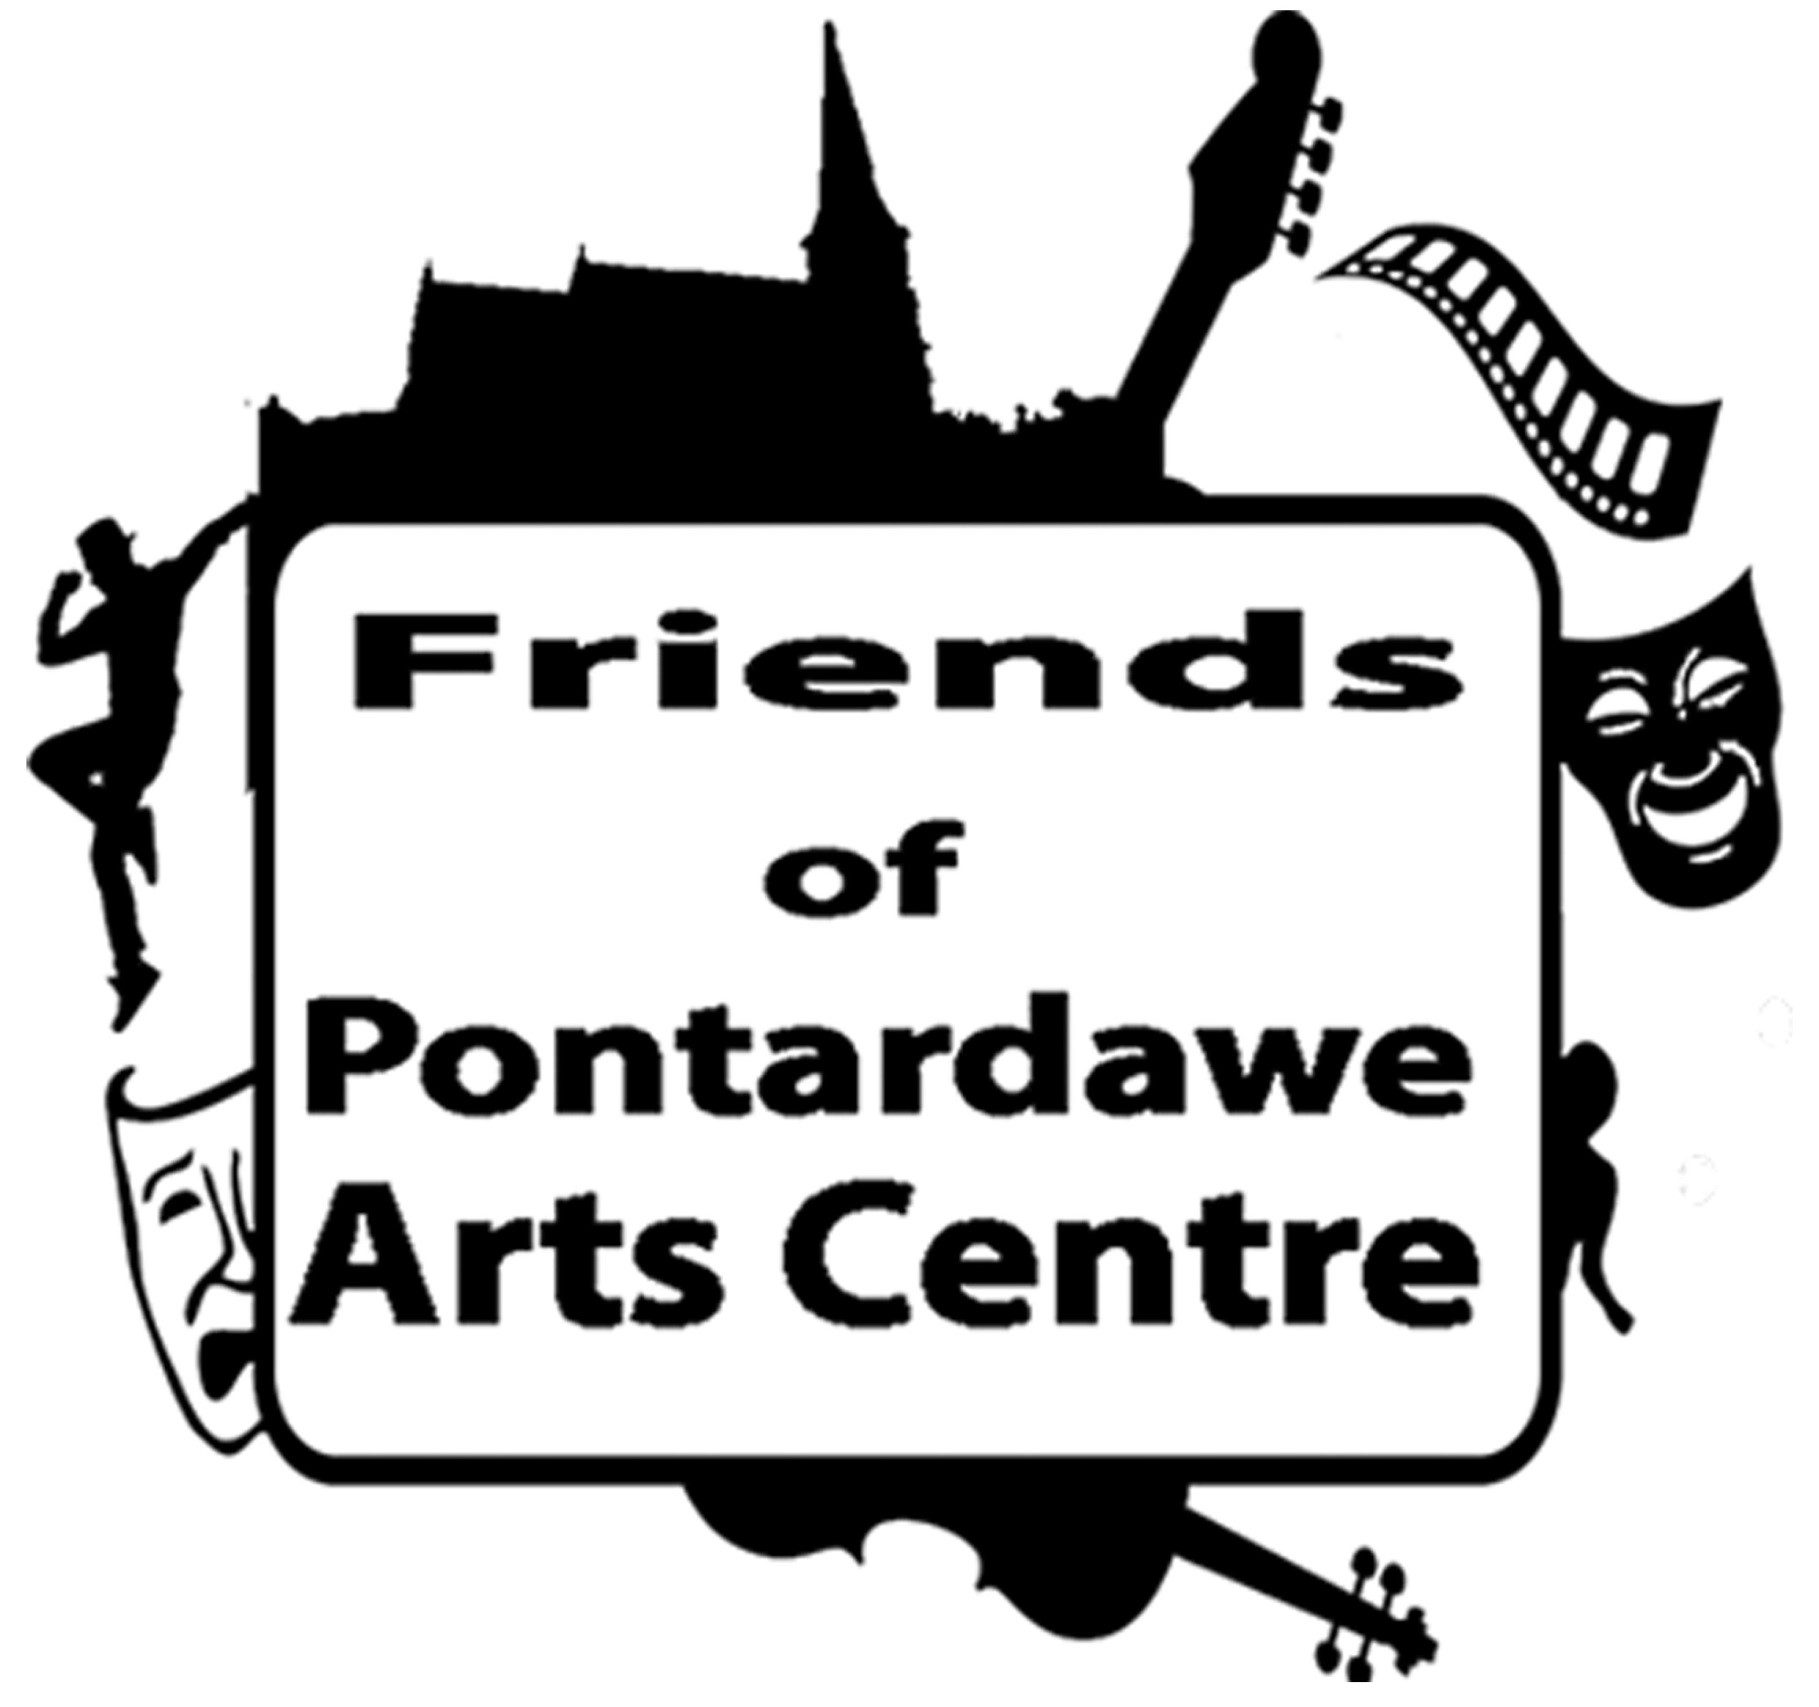 Friends of Pontardawe Arts Centre